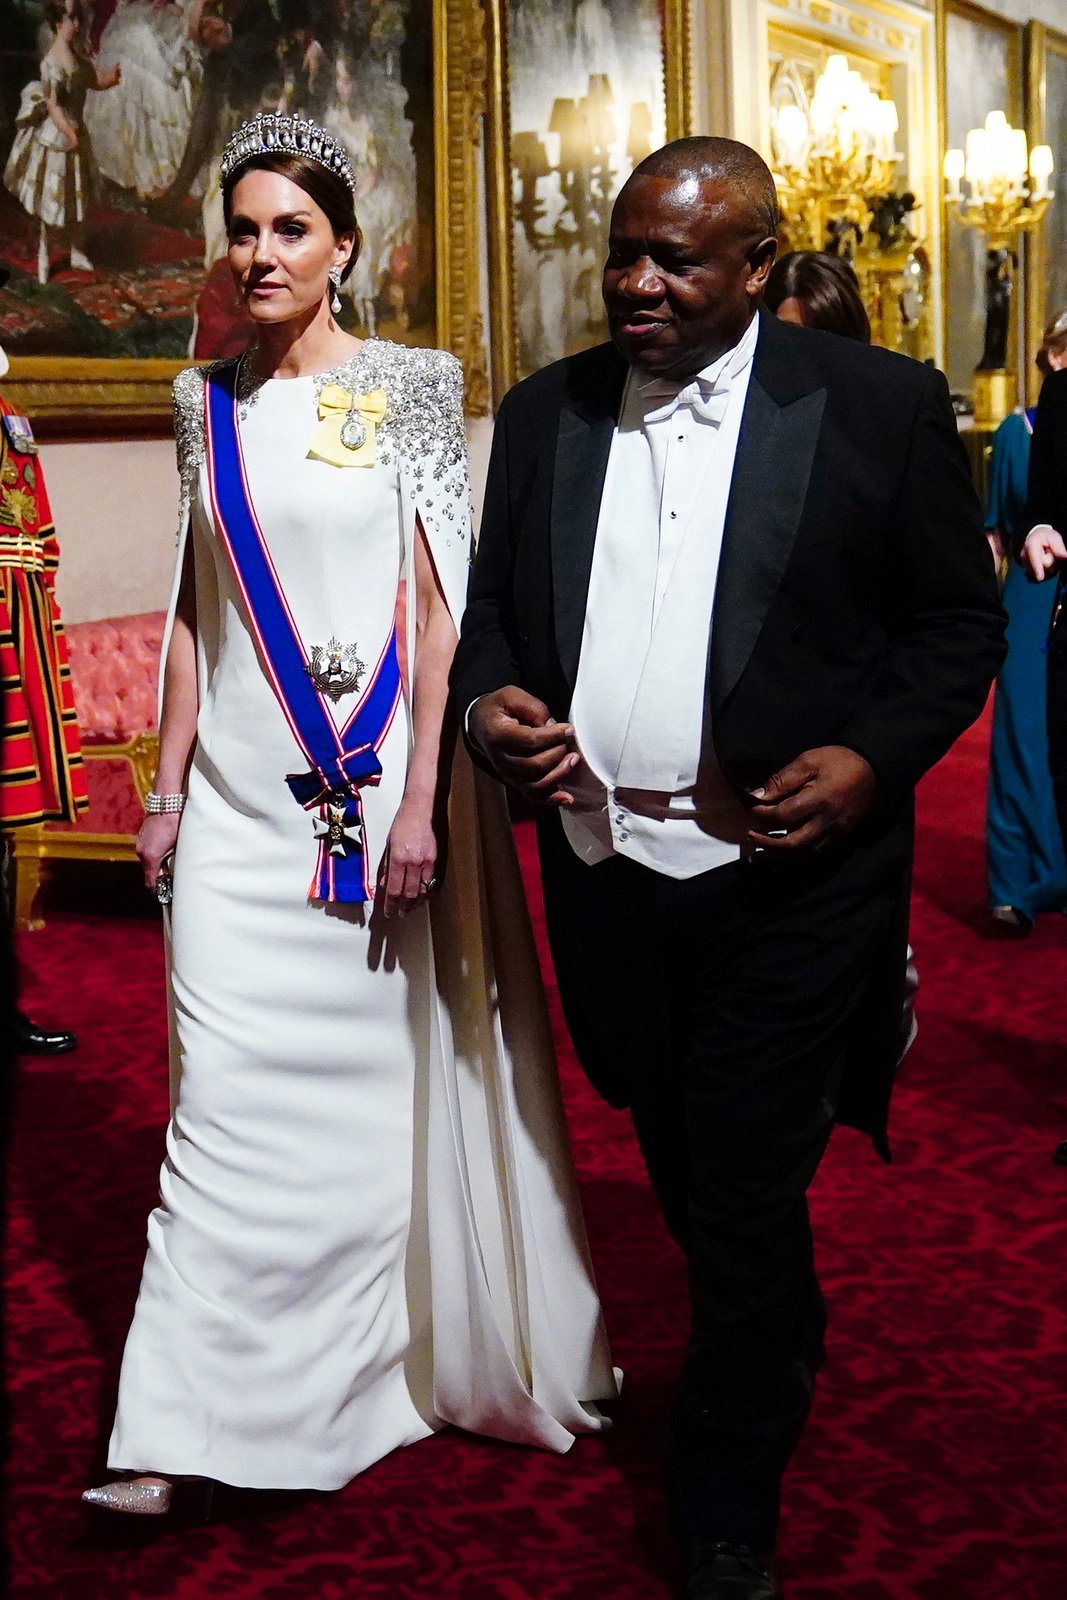 Princezna Catherine  na recepci s prezidentem Jihoafrické republiky